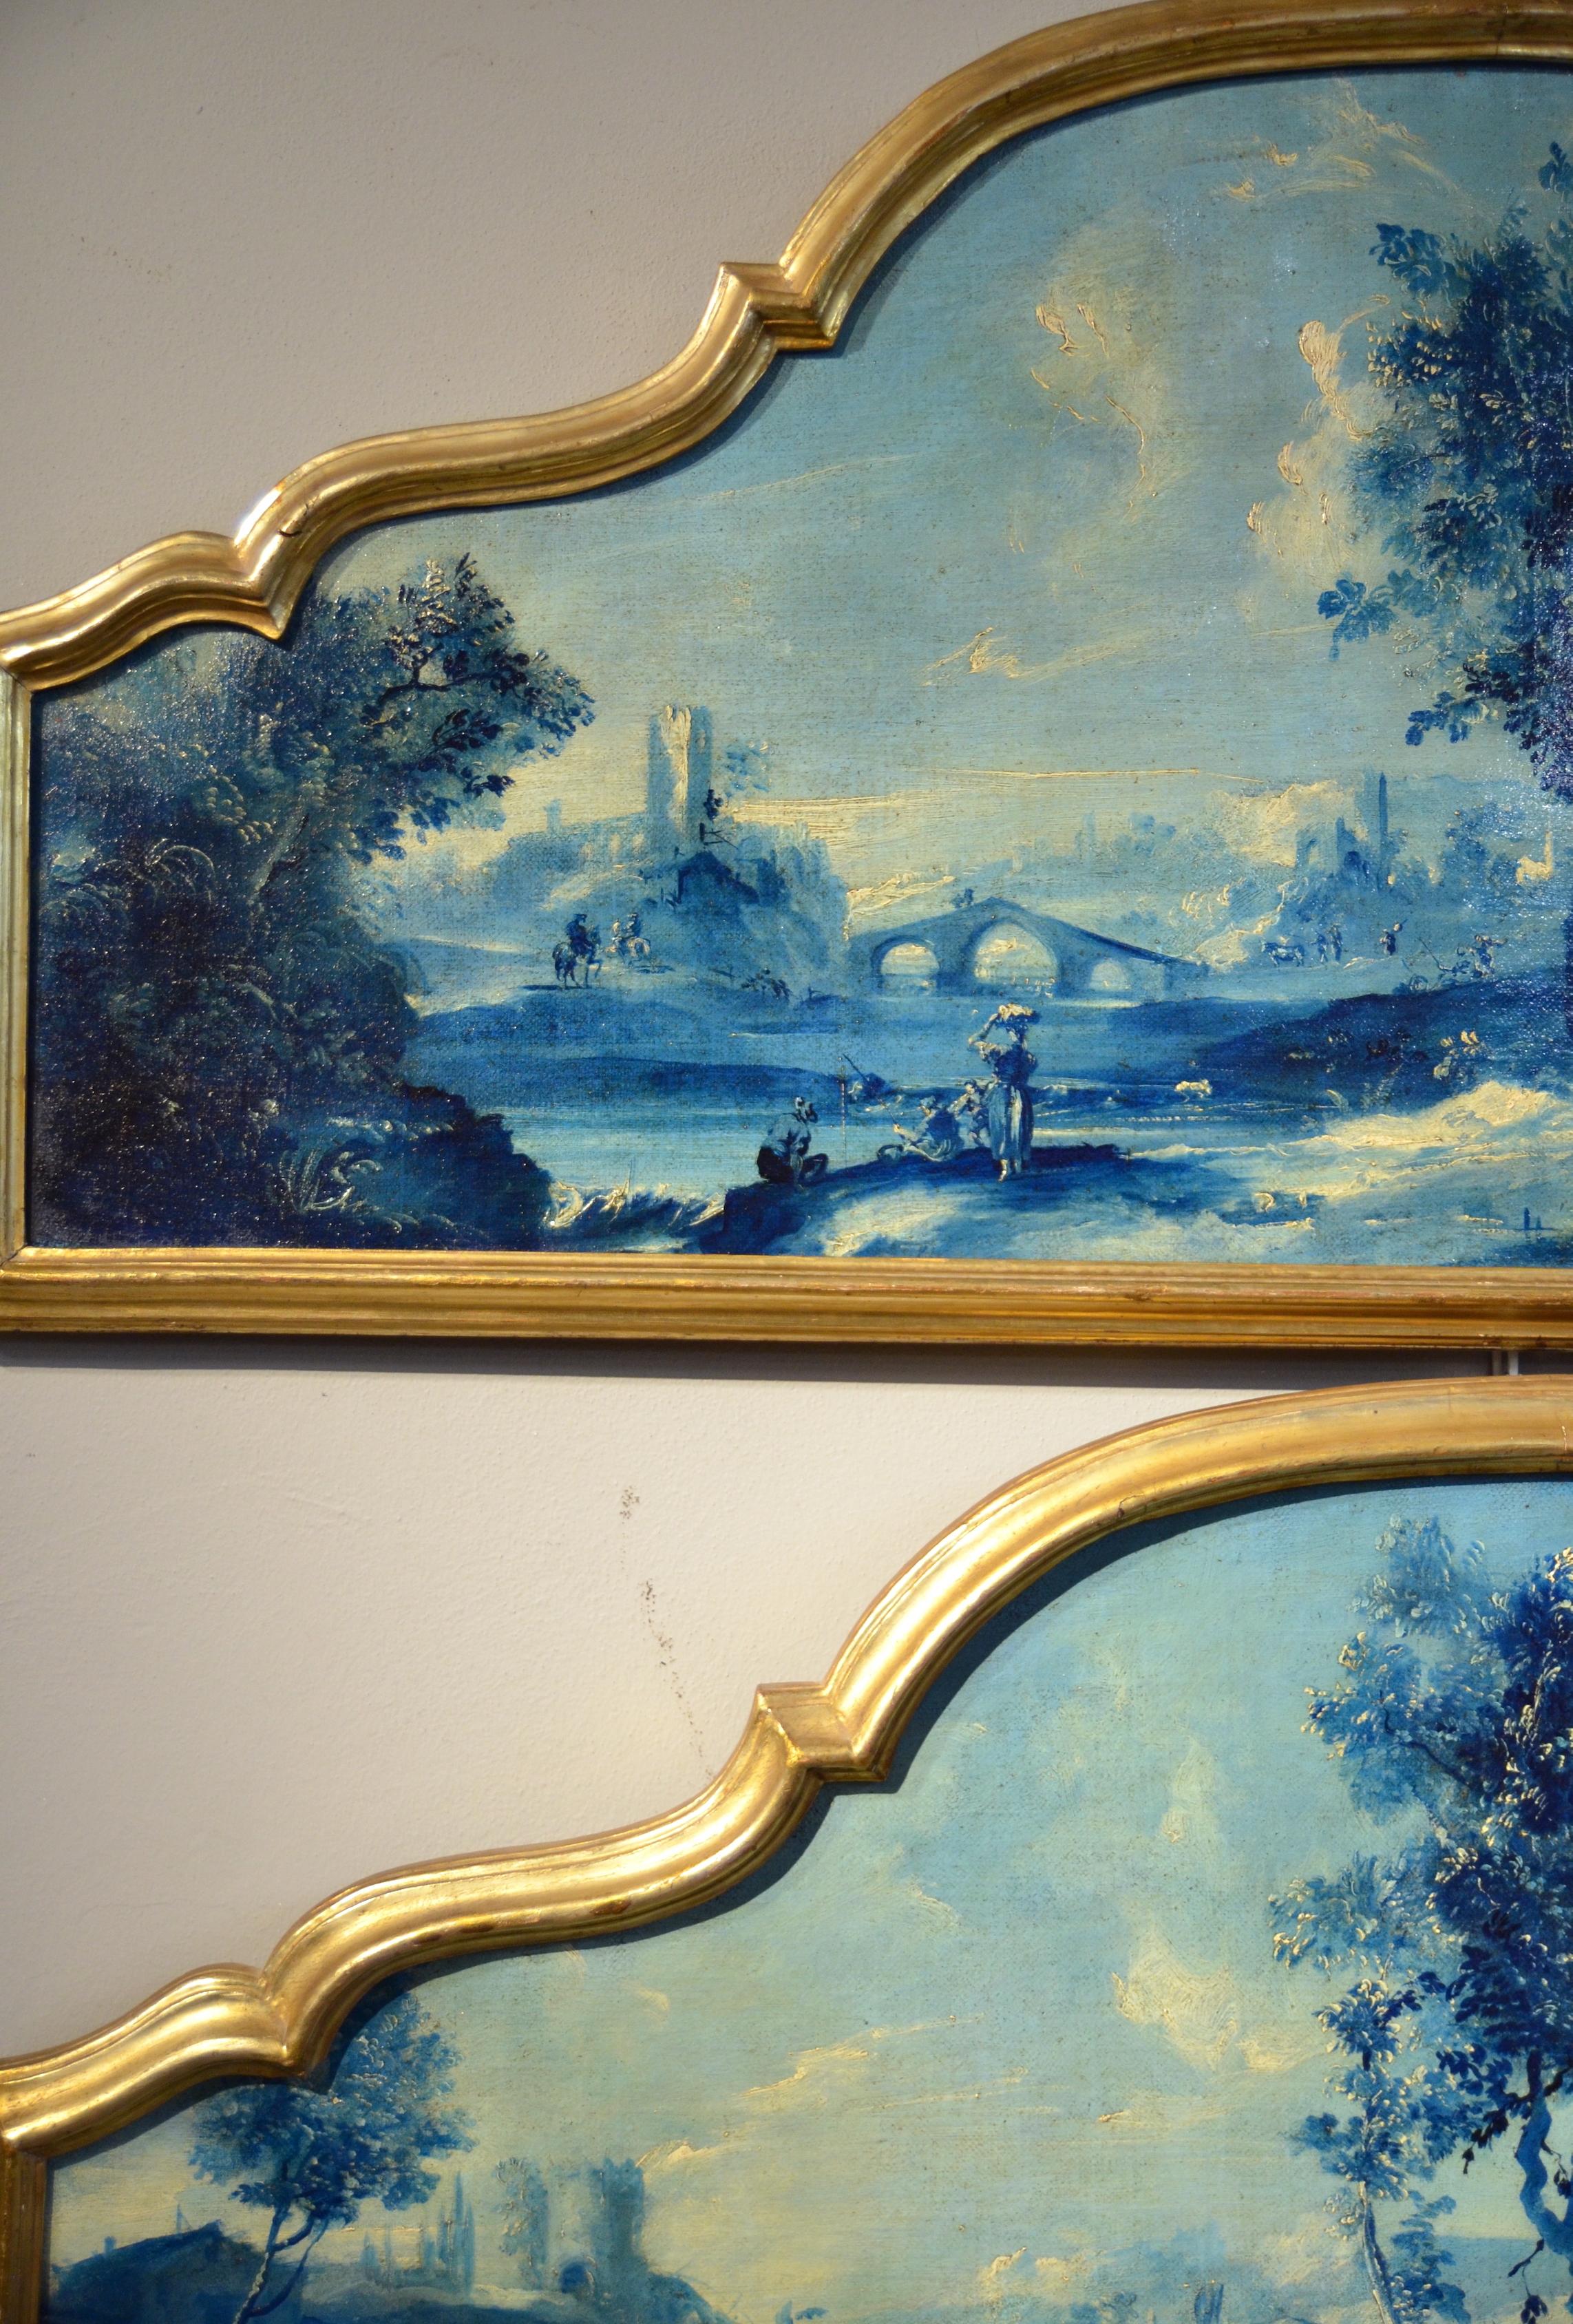 Paint Oil on canvas Pair Landscape Wood See Lake Venezia Italy Baroque Ricci Art 8